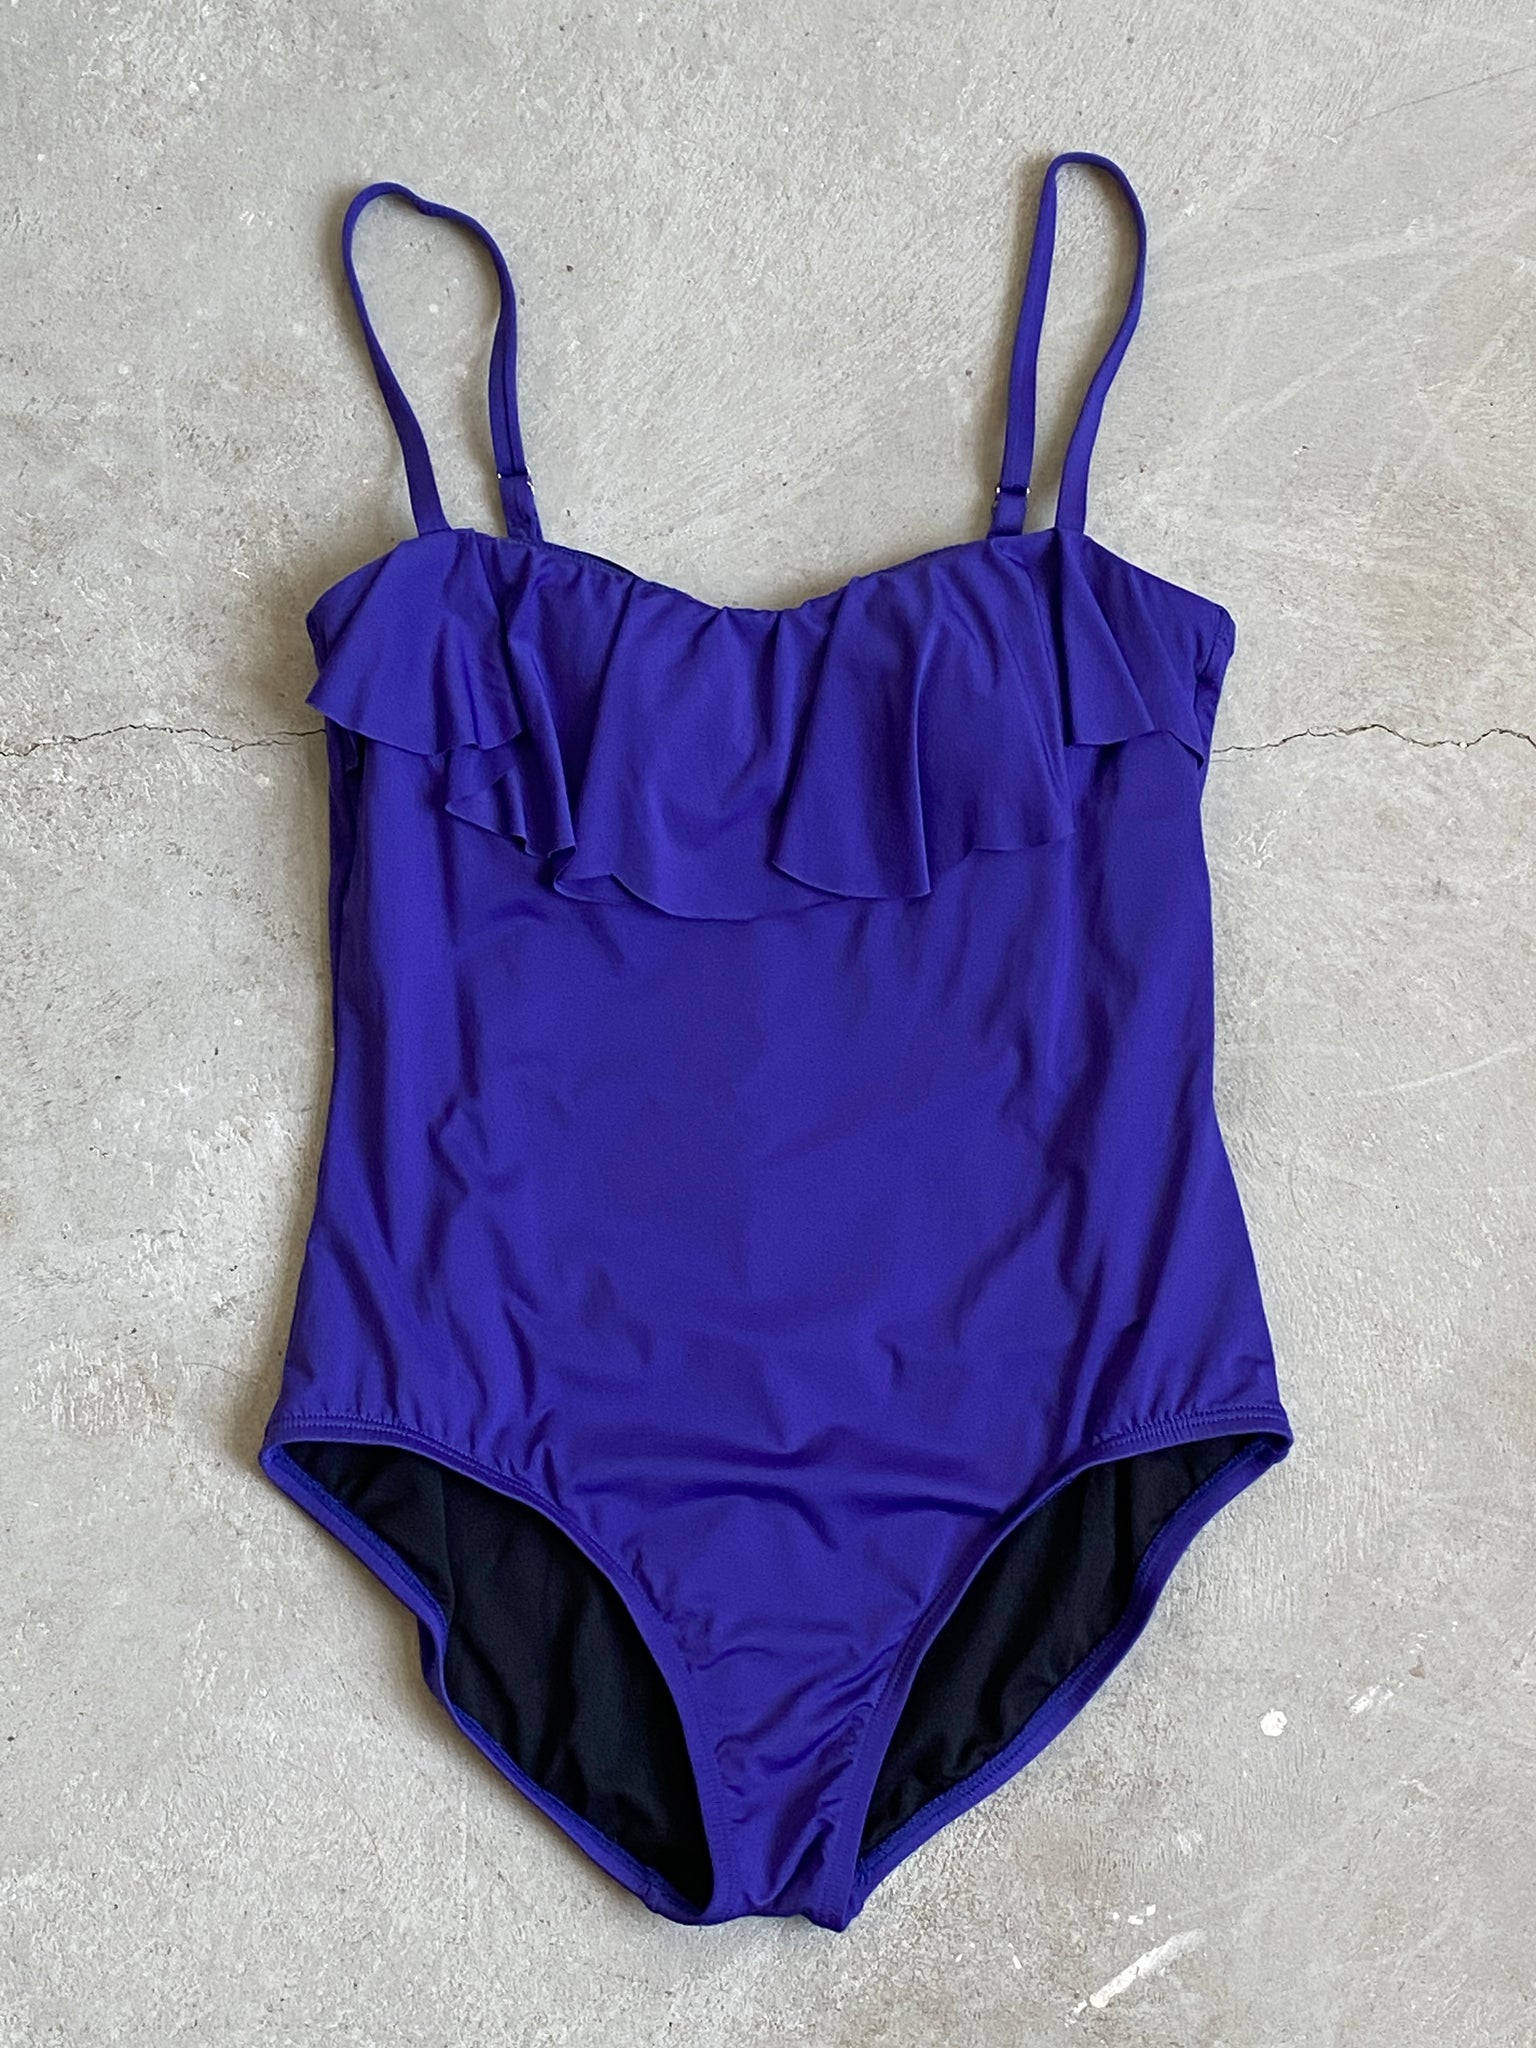 Purple Ruffle One Piece Swimsuit (M)